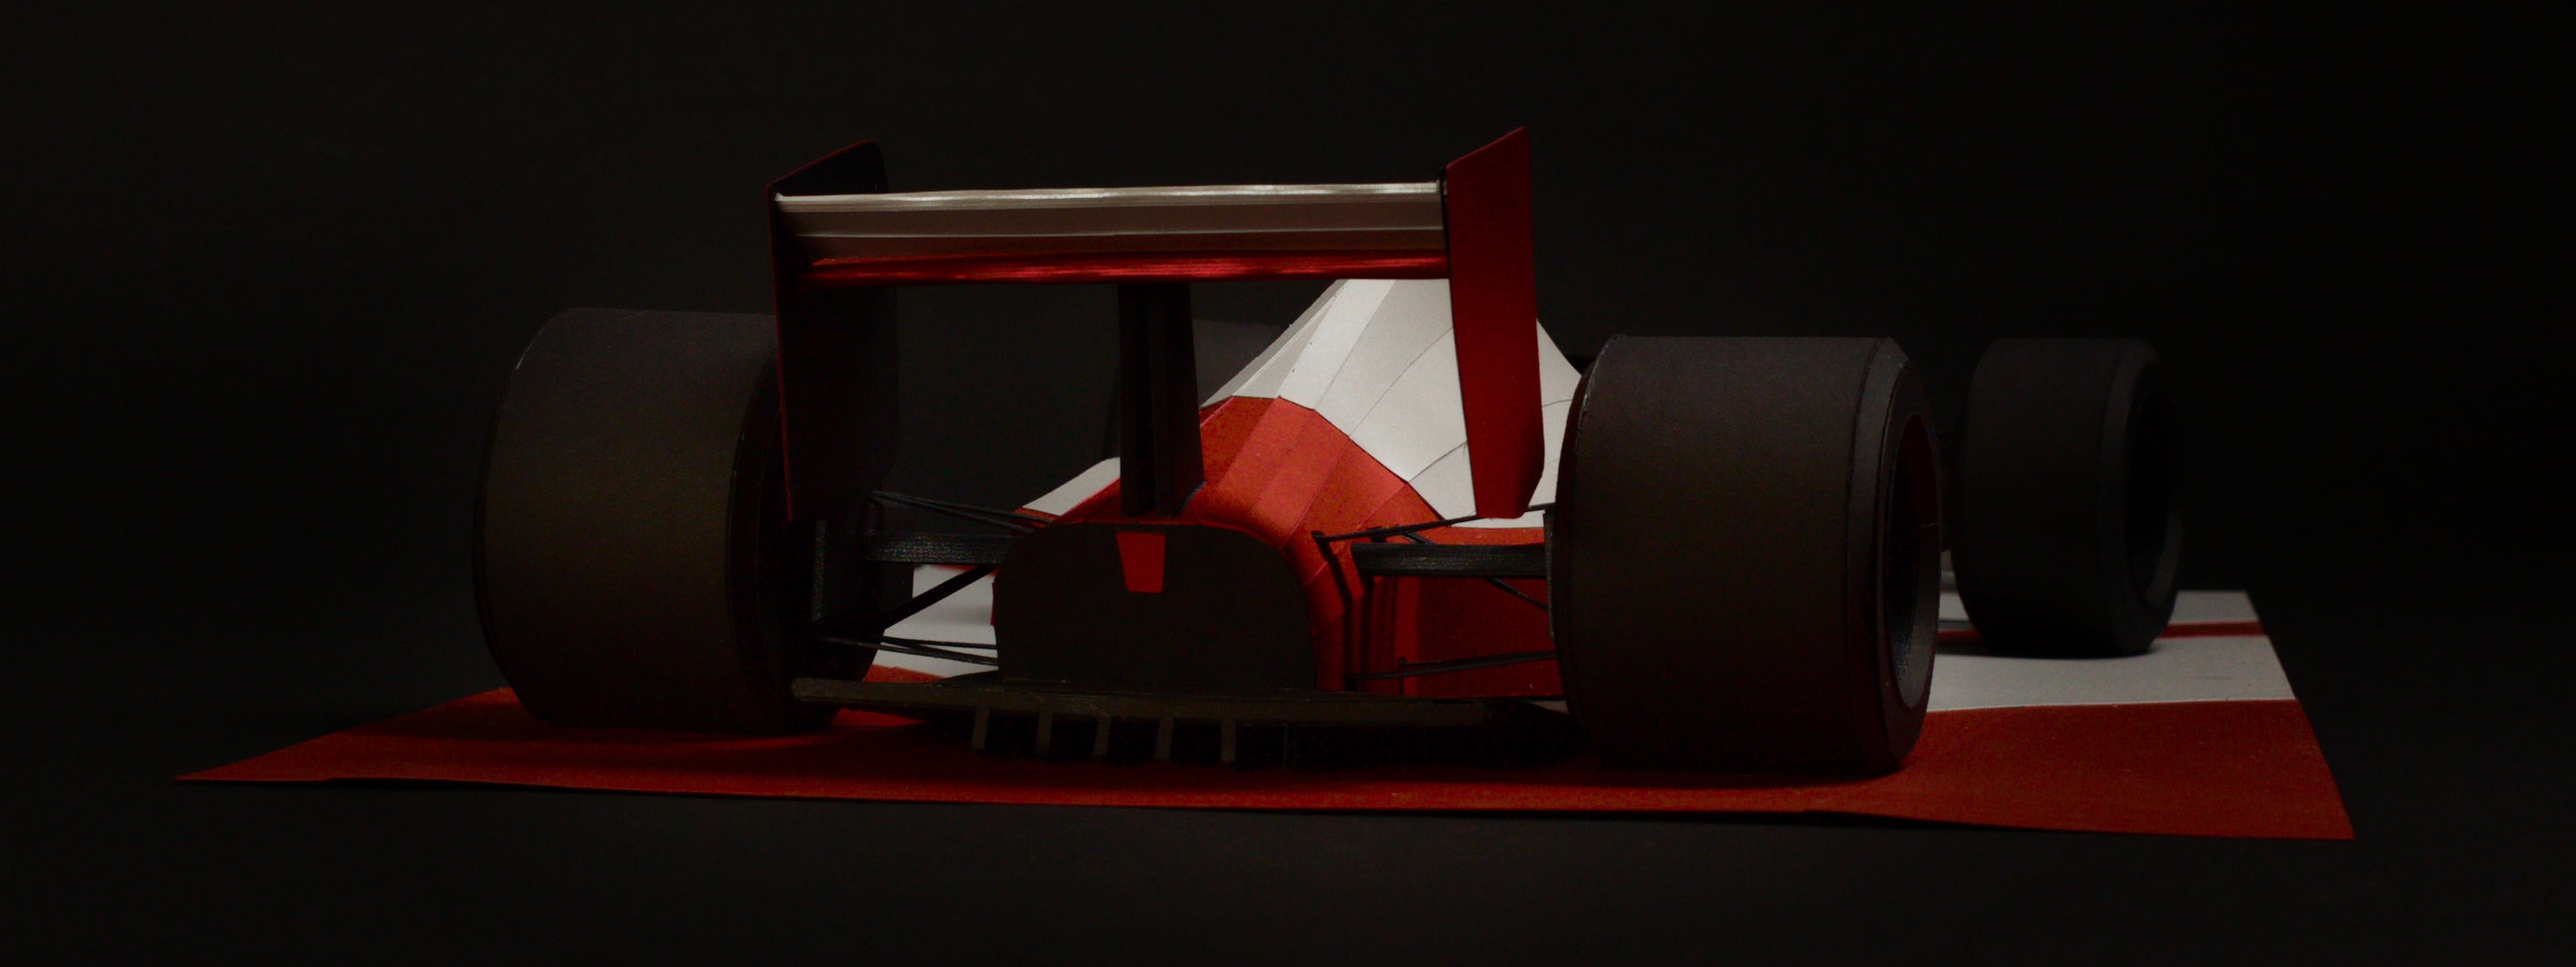 Formula 1 Legend Wall Sculpture angle 1